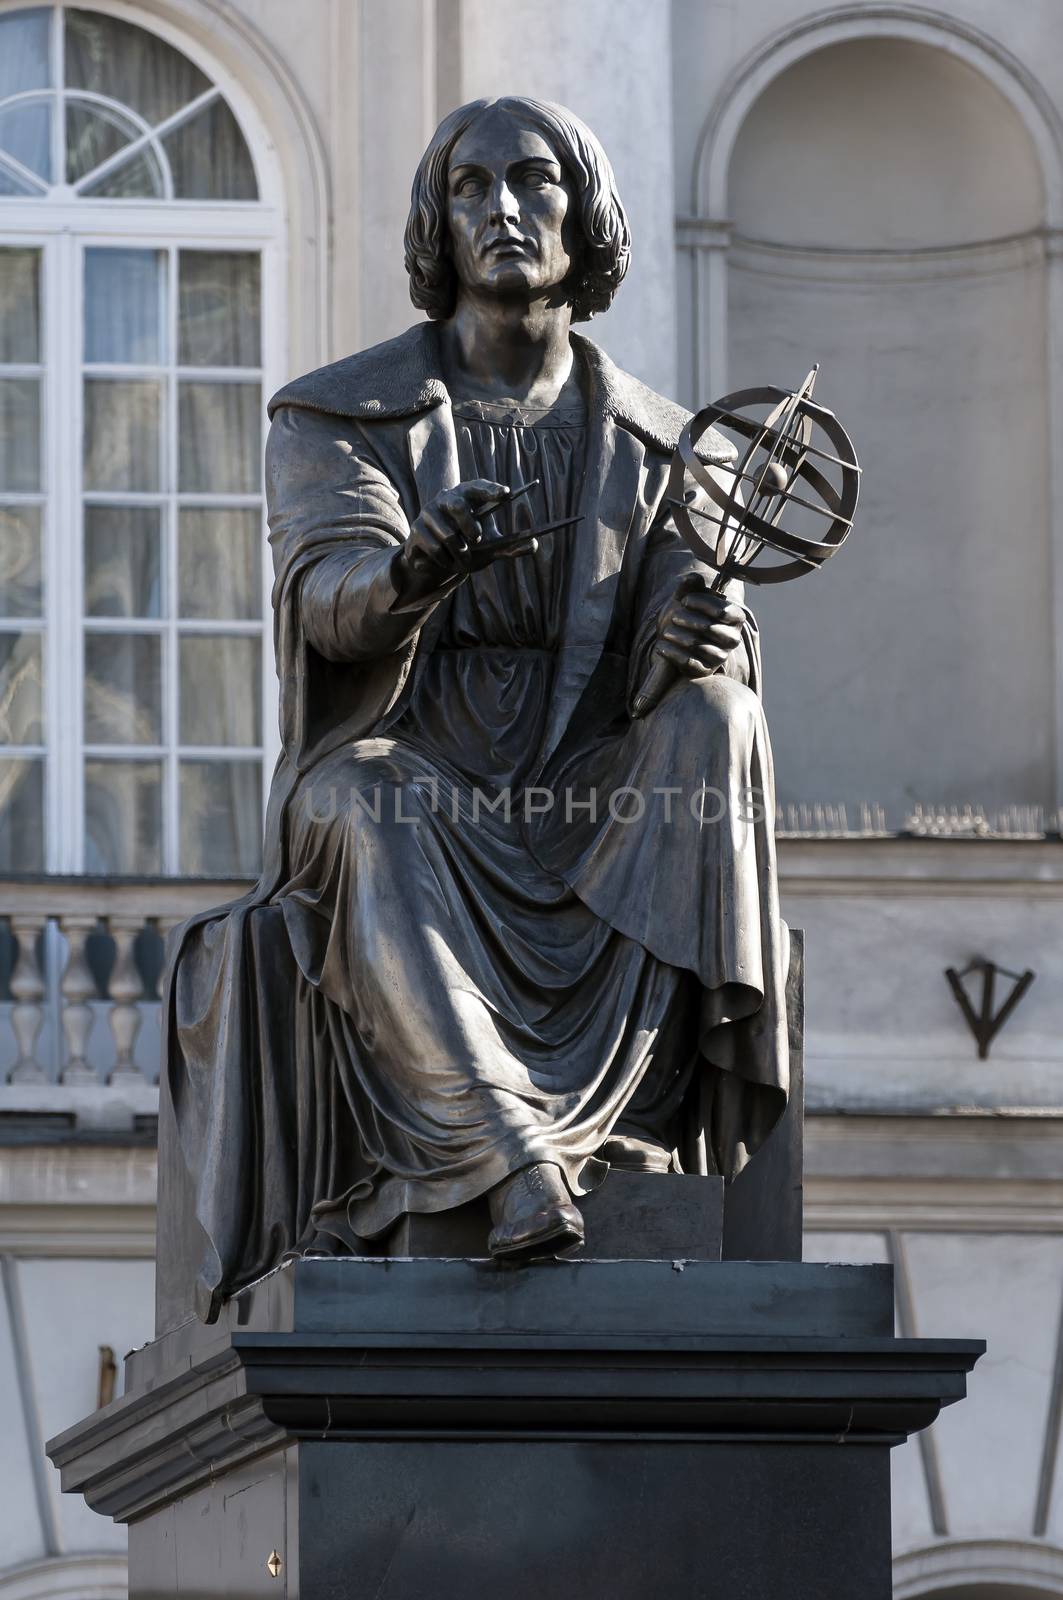 Monument to Nicolaus Copernicus in Warsaw, Poland.